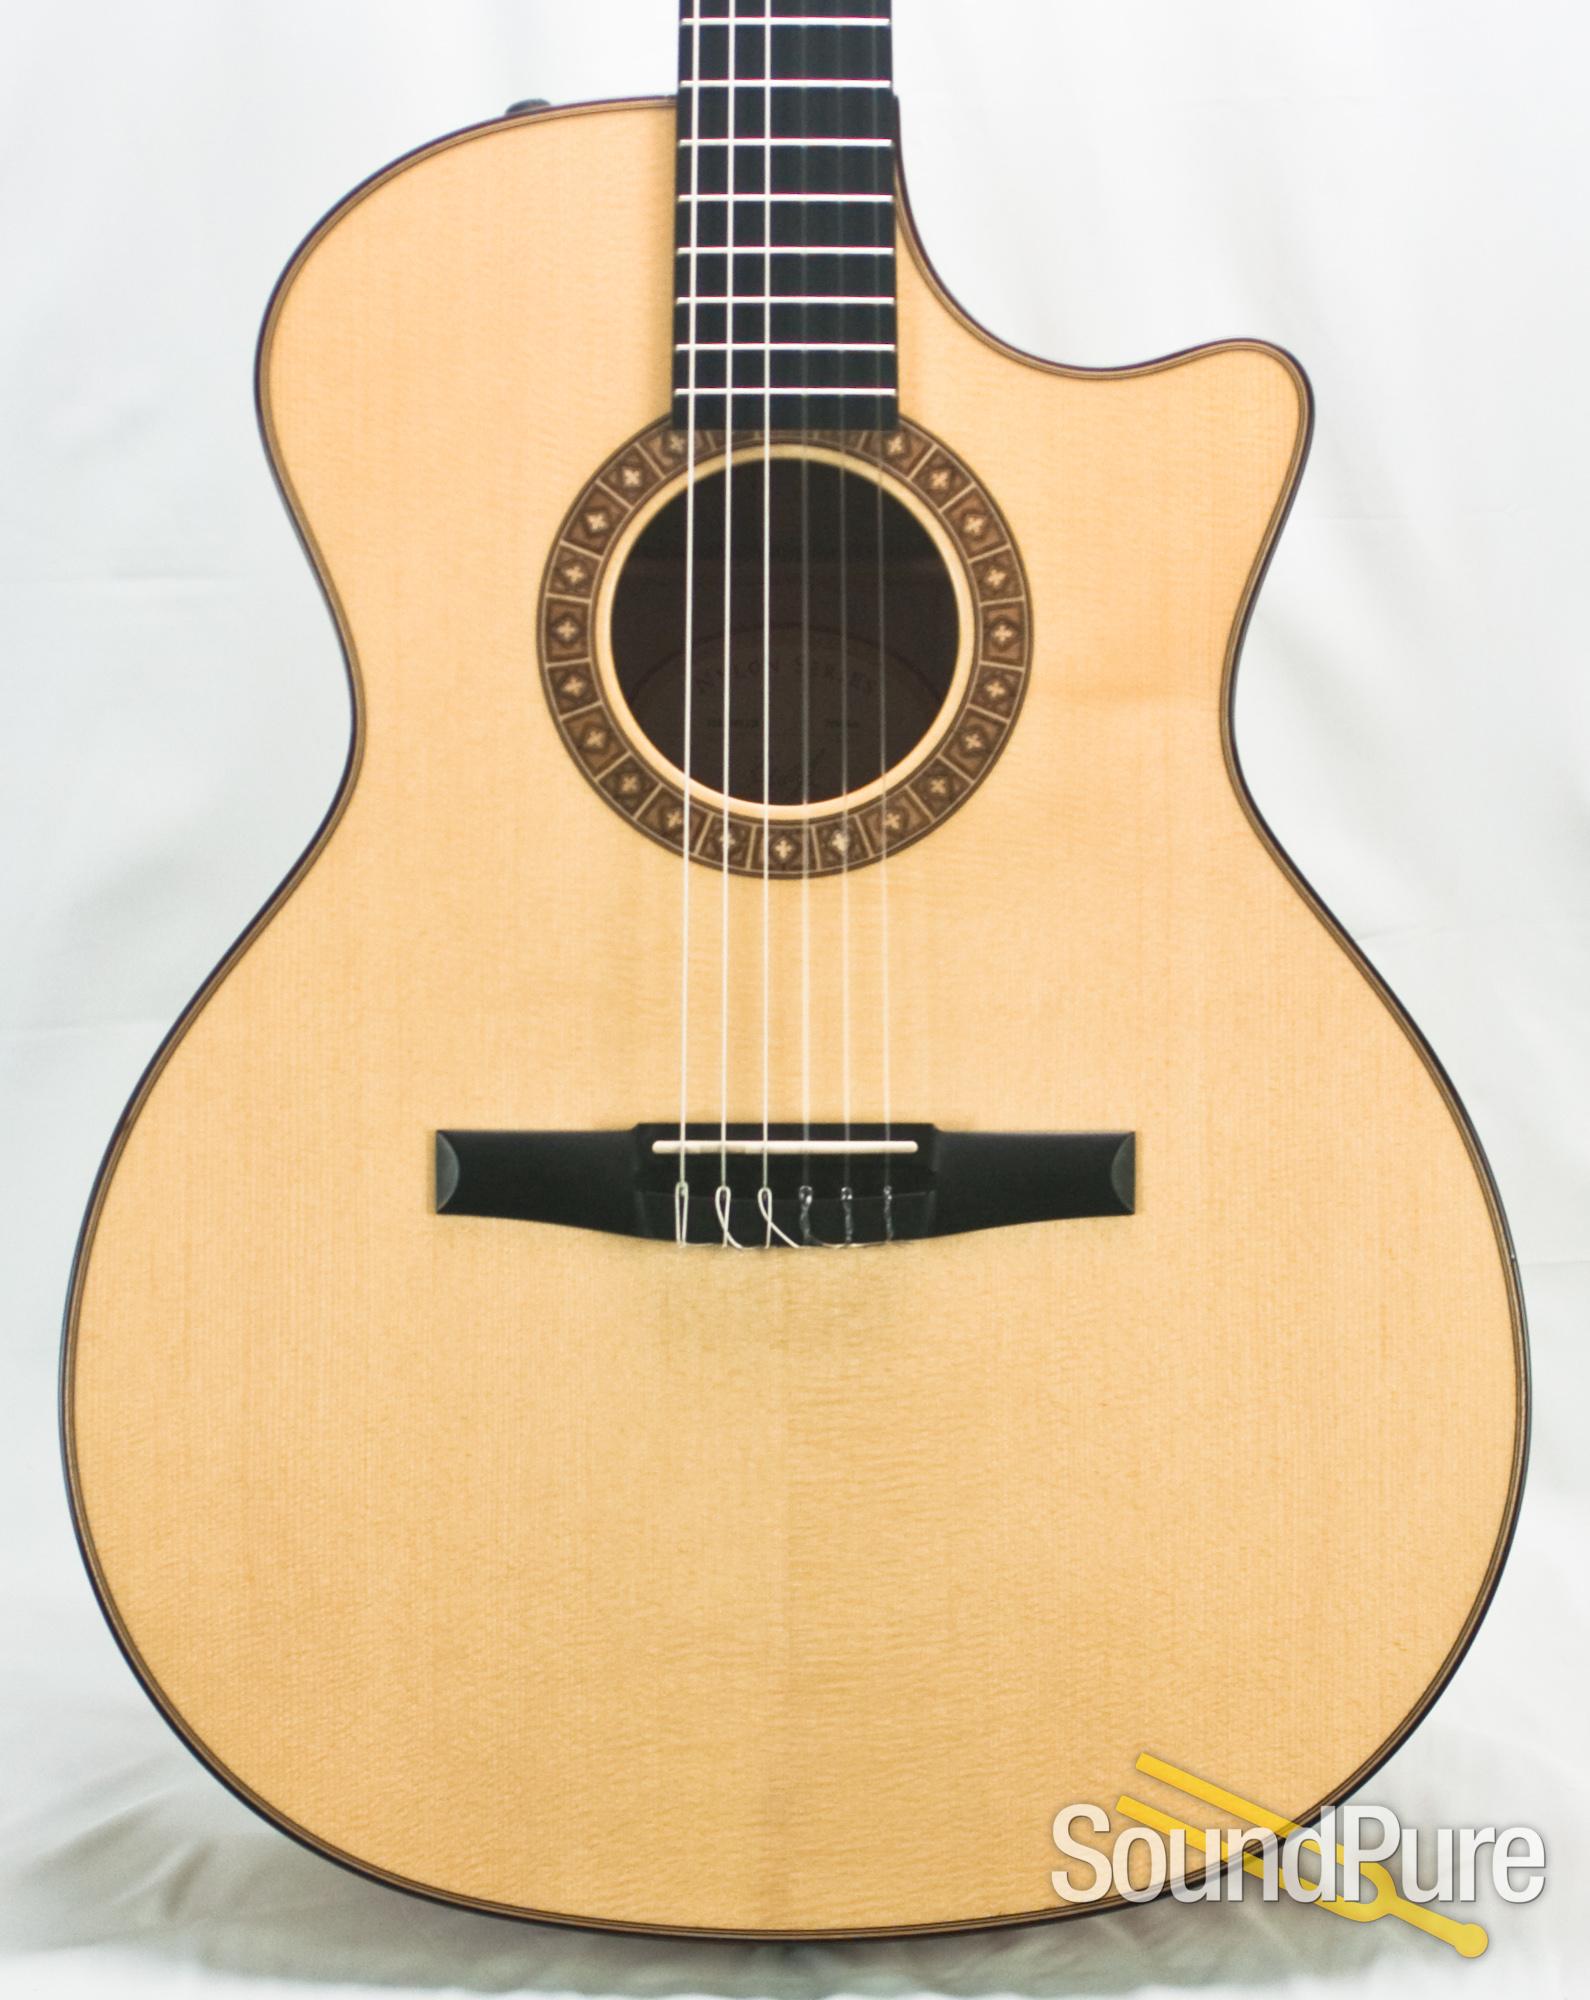 A Nylon String Acoustic 36